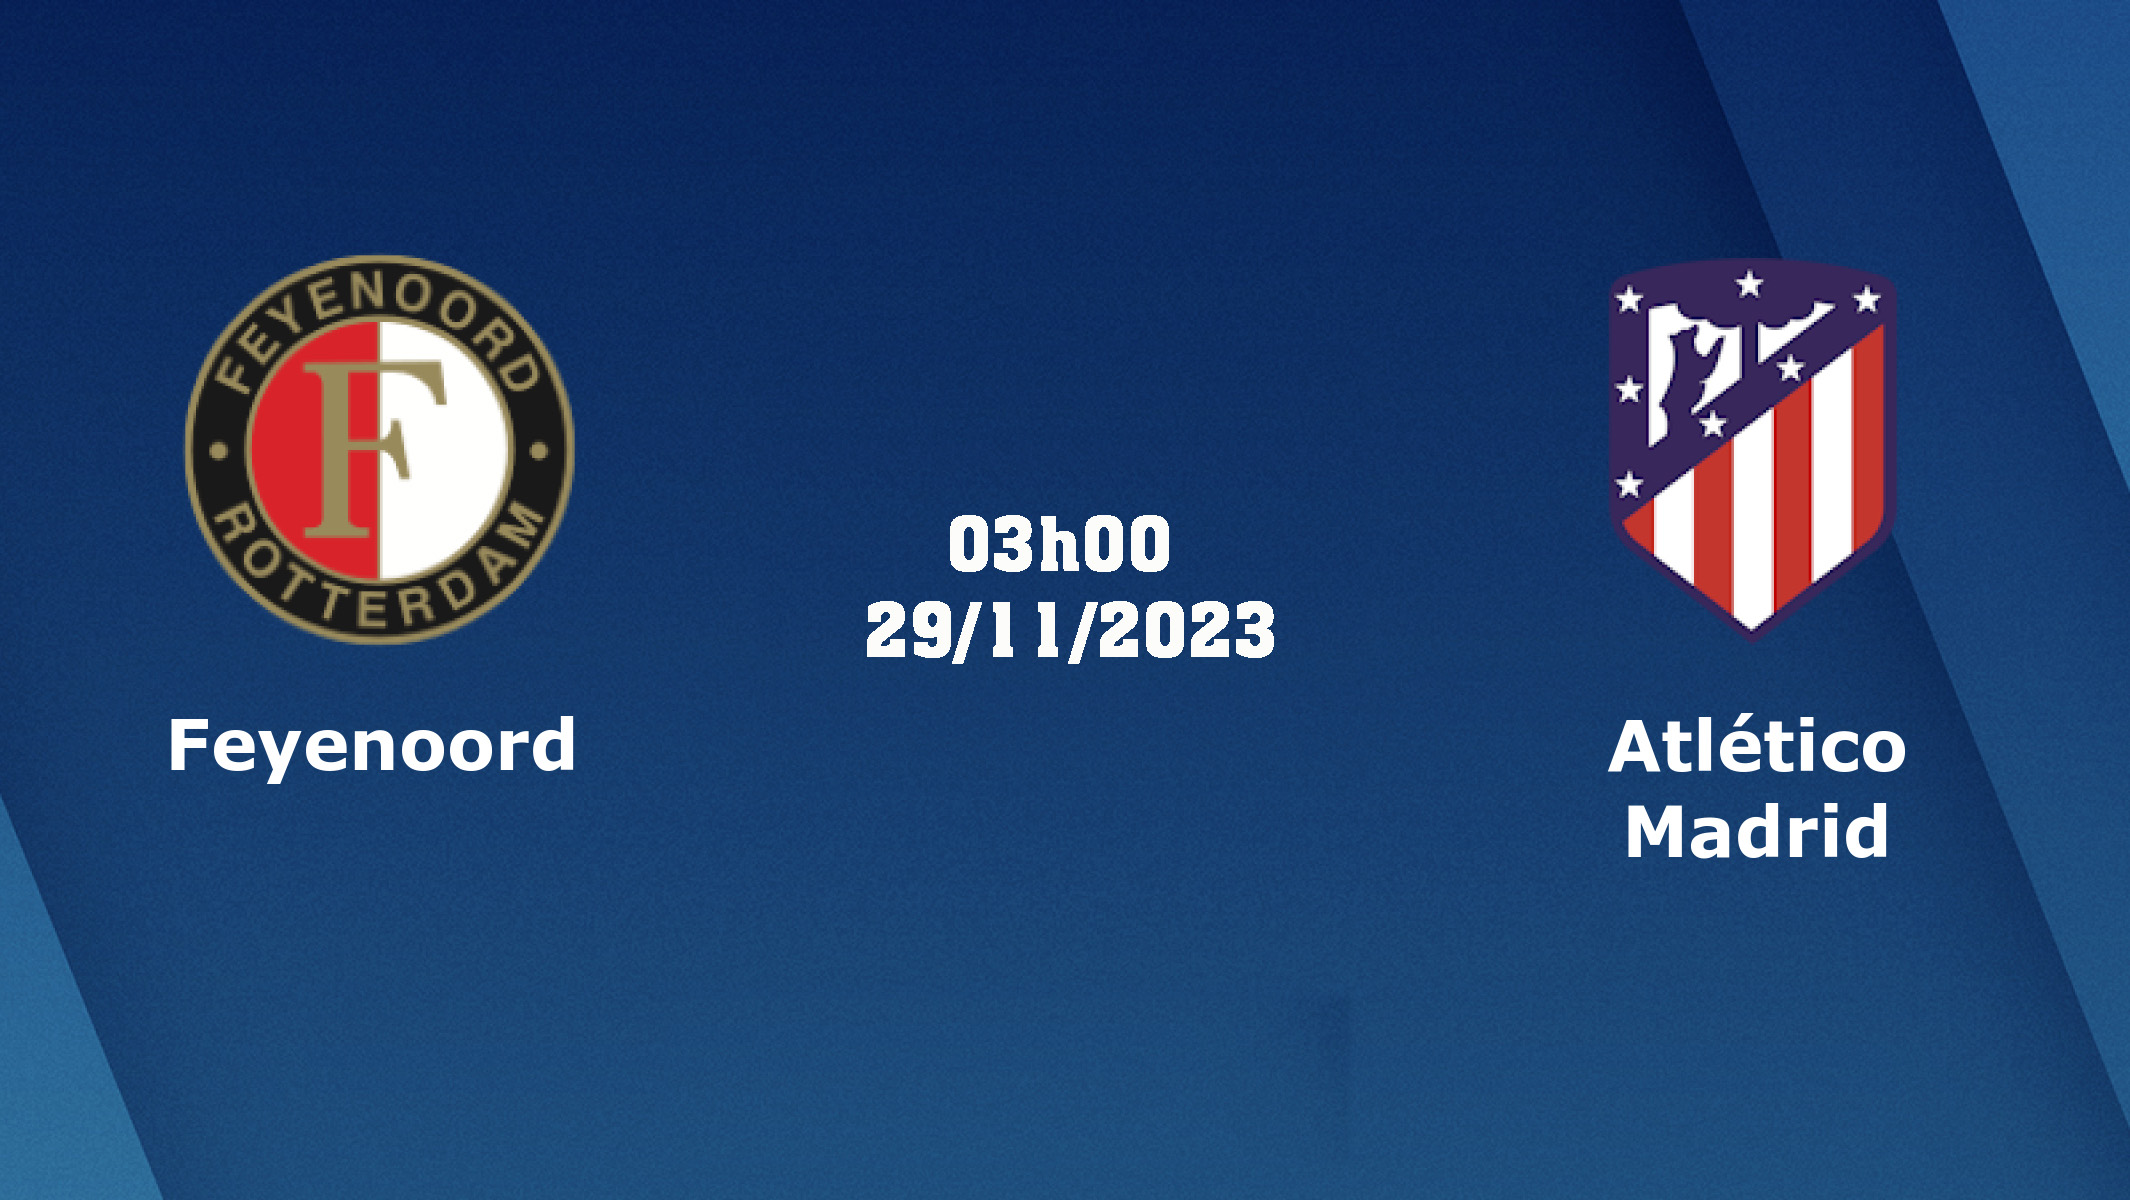 Nhận định soi kèo Feyenoord vs Atletico Madrid – 03h00 29/11/2023